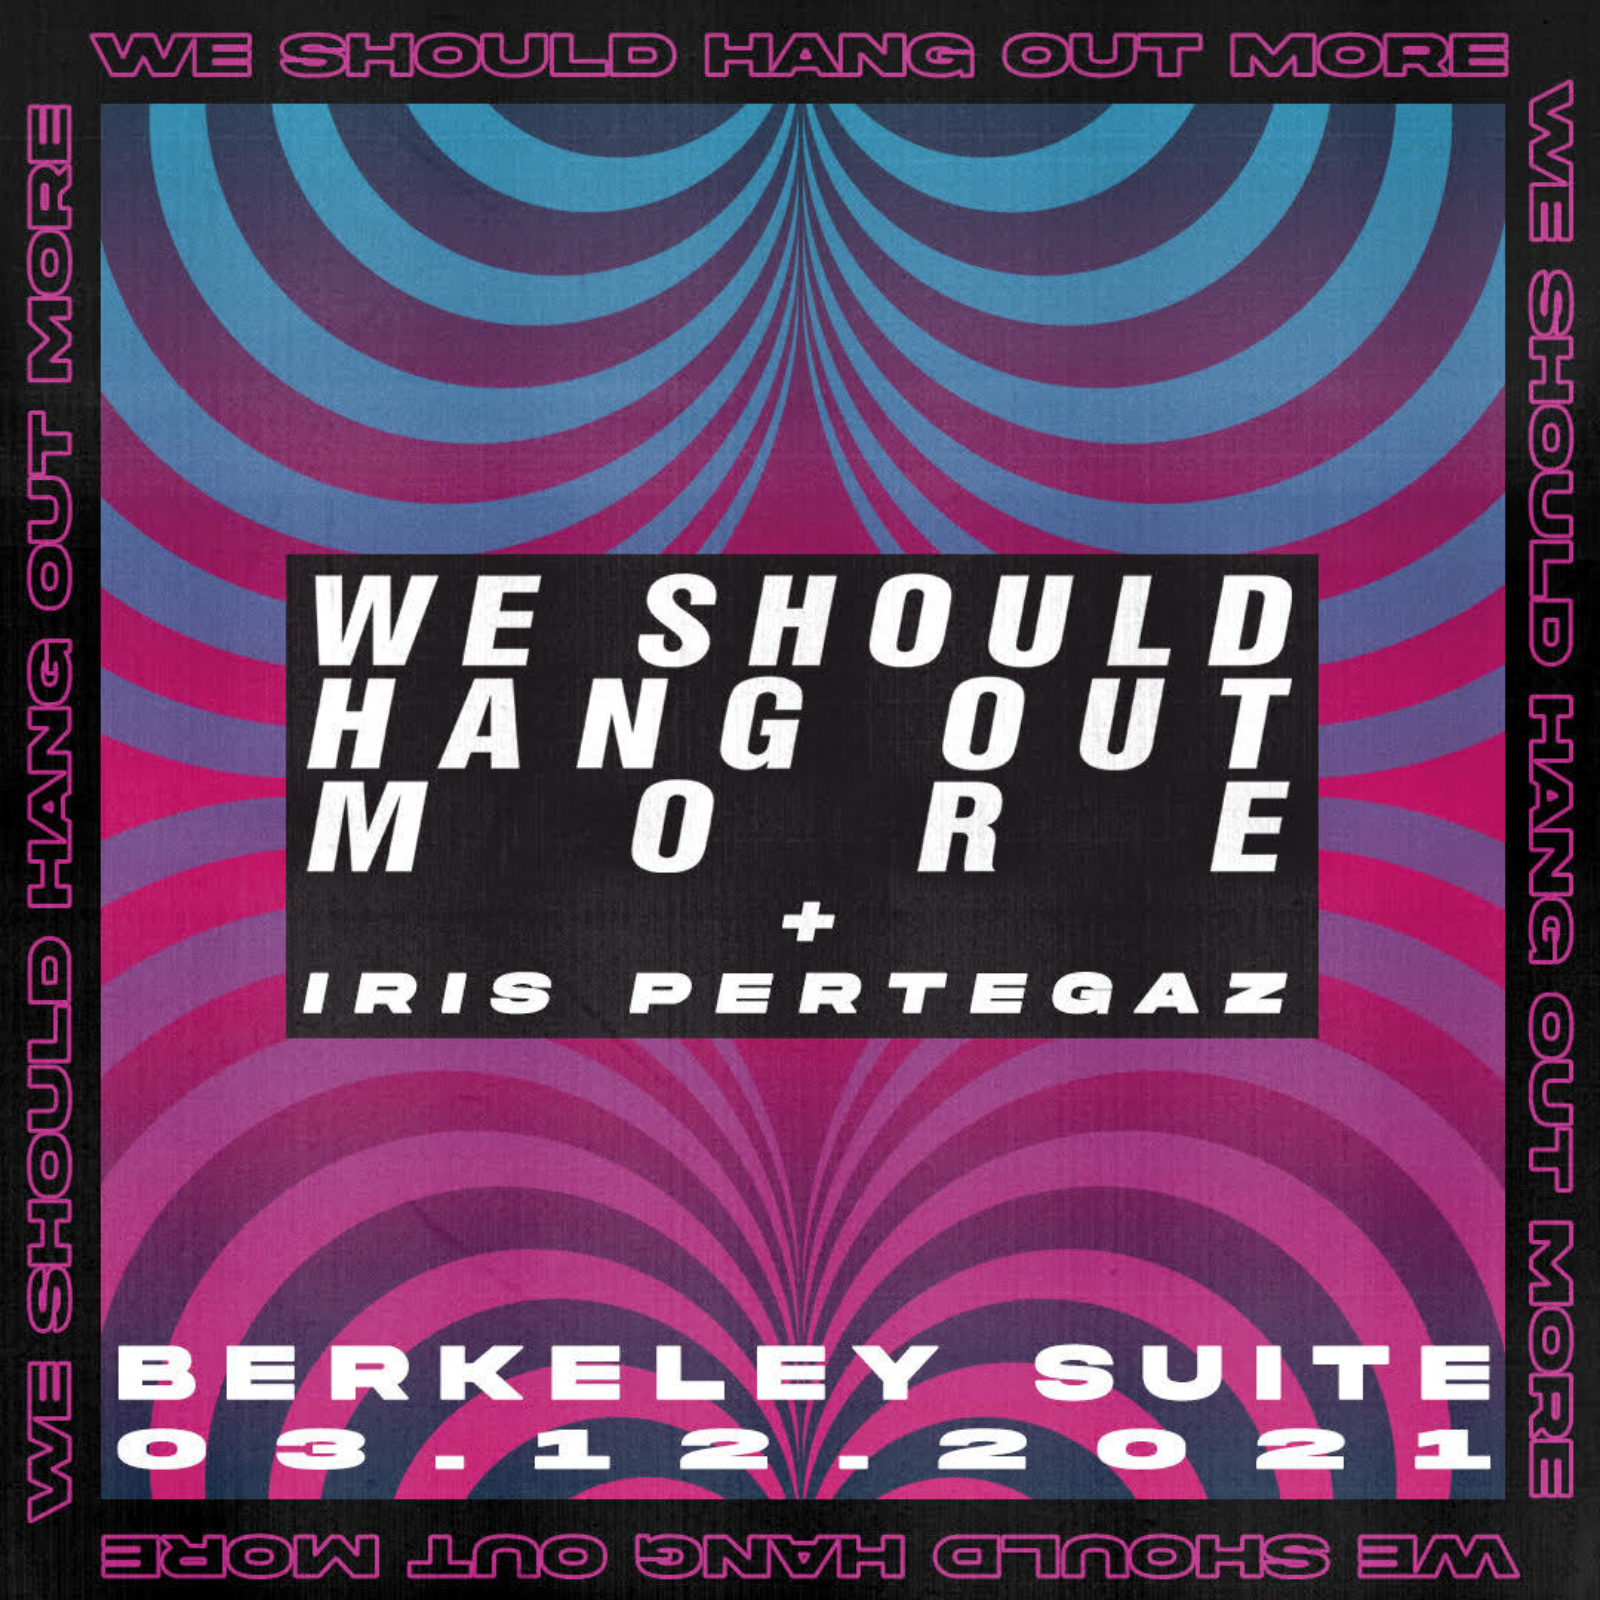 We Should Hang Out More - Iris Pertegaz